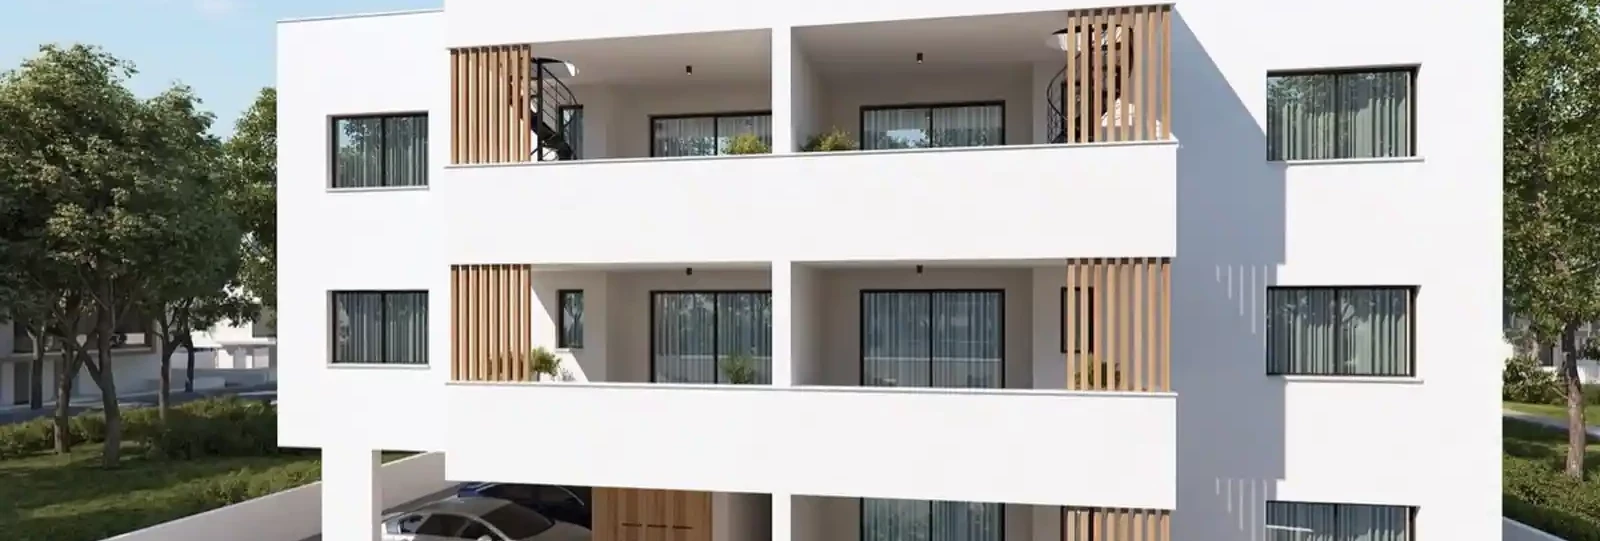 2-bedroom penthouse fоr sаle €195.000, image 1